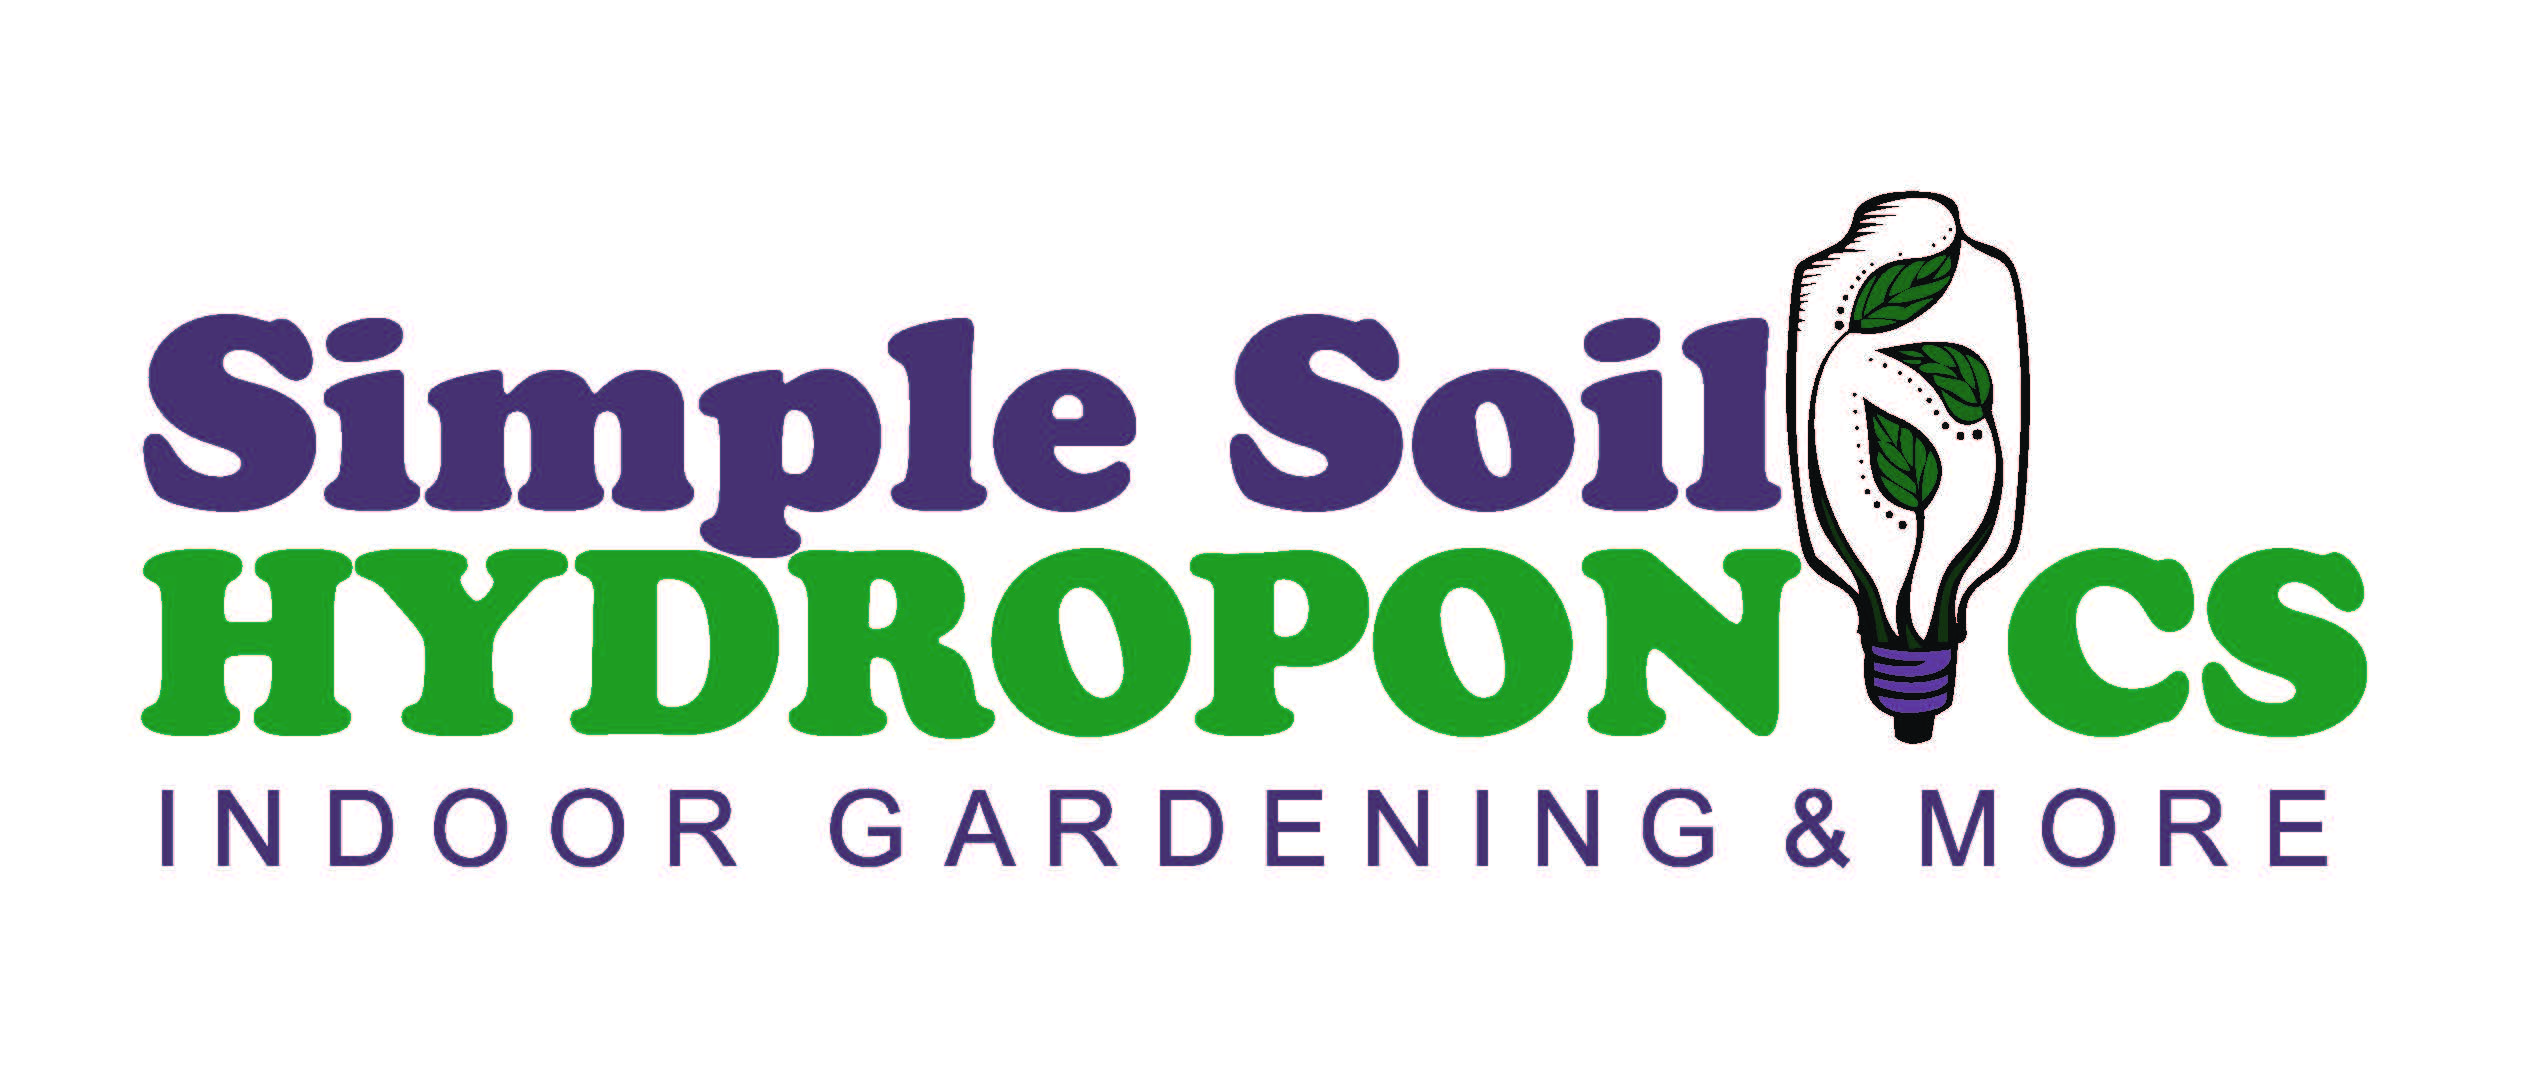 Simple Soil Hydroponics Villa Park Illinois